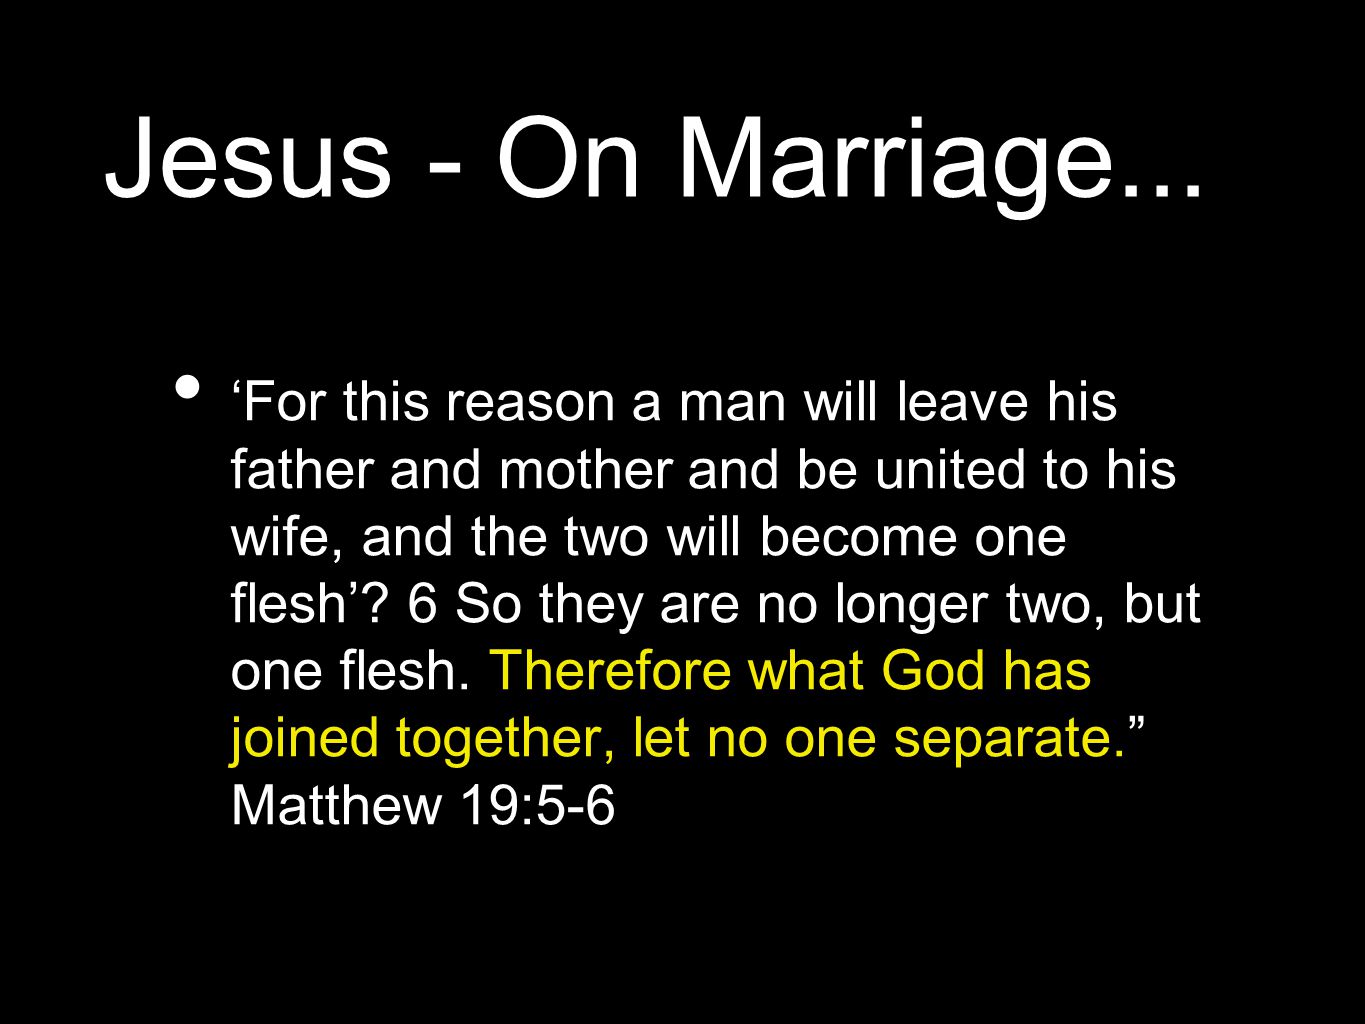 Jesus - On Marriage...